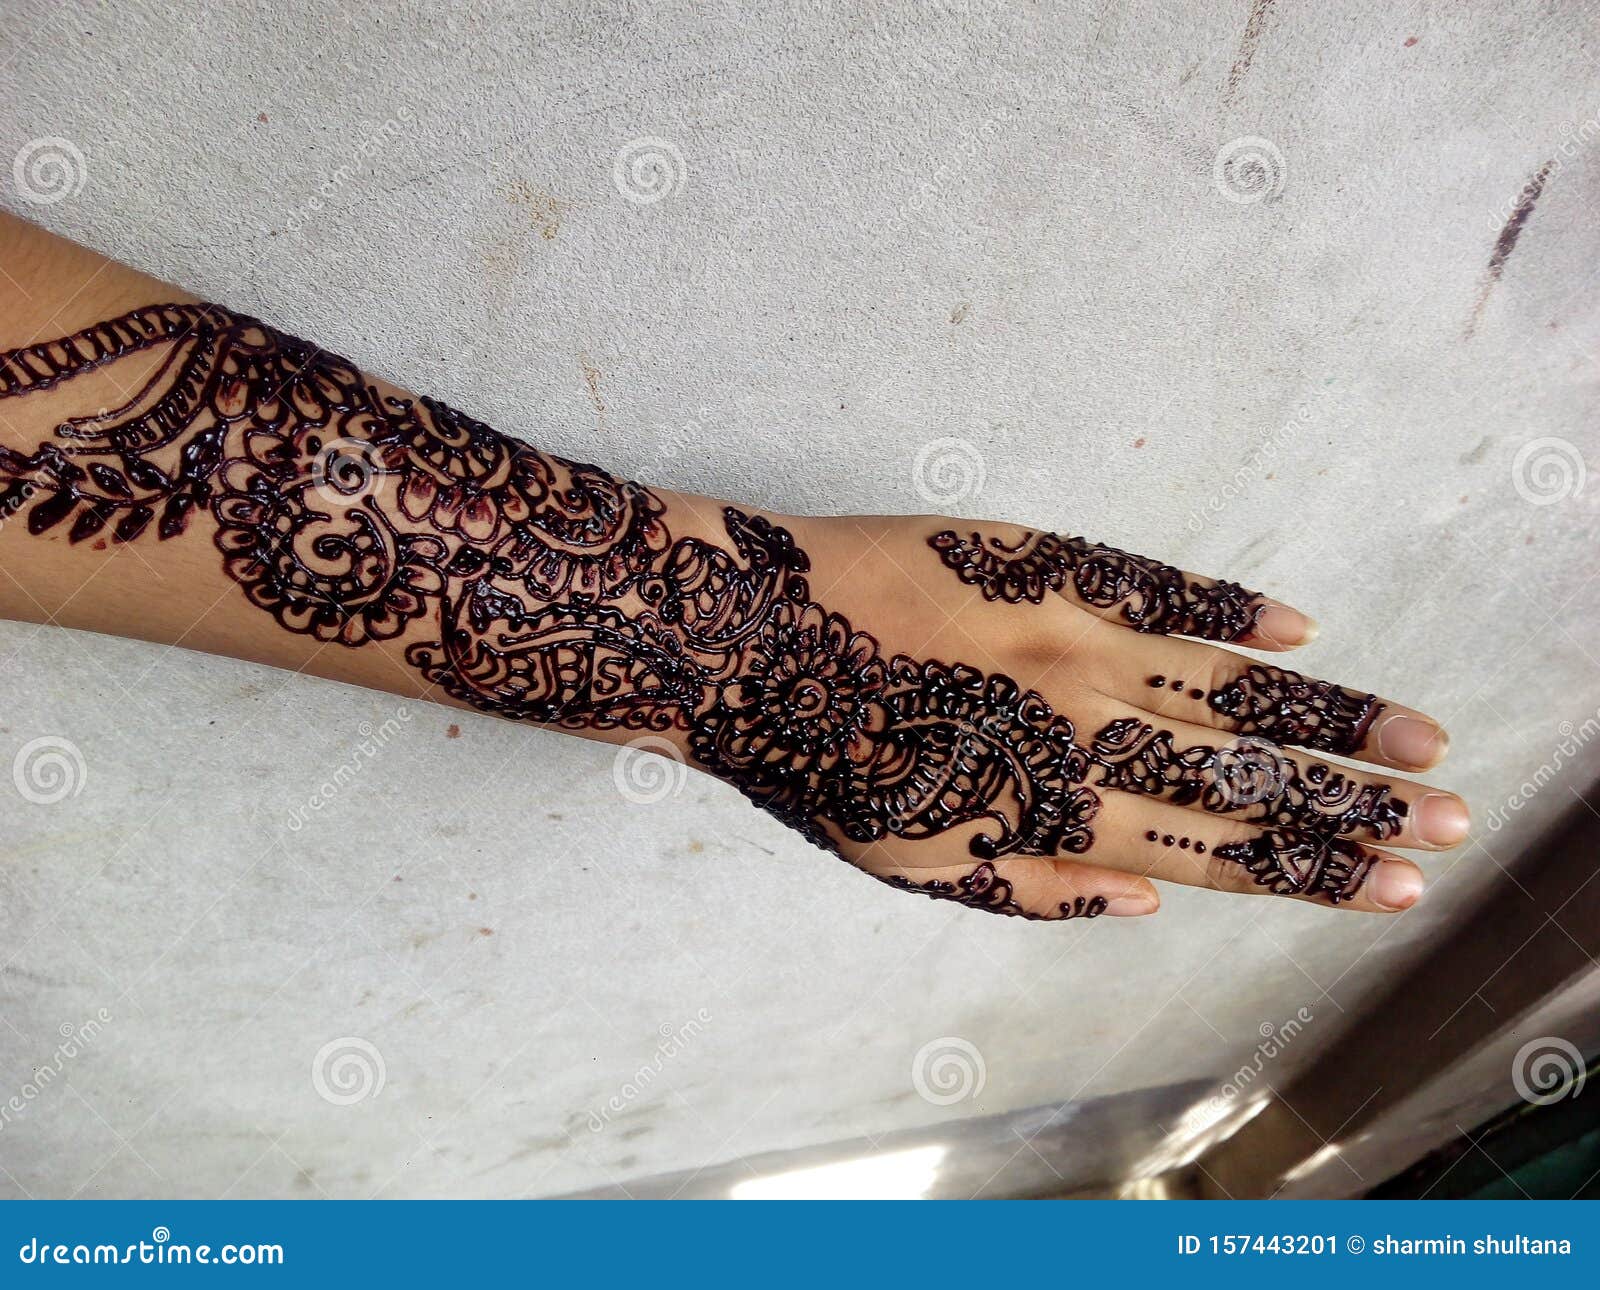 Mahadi lover stock image. Image of design, lover, hand - 157443201